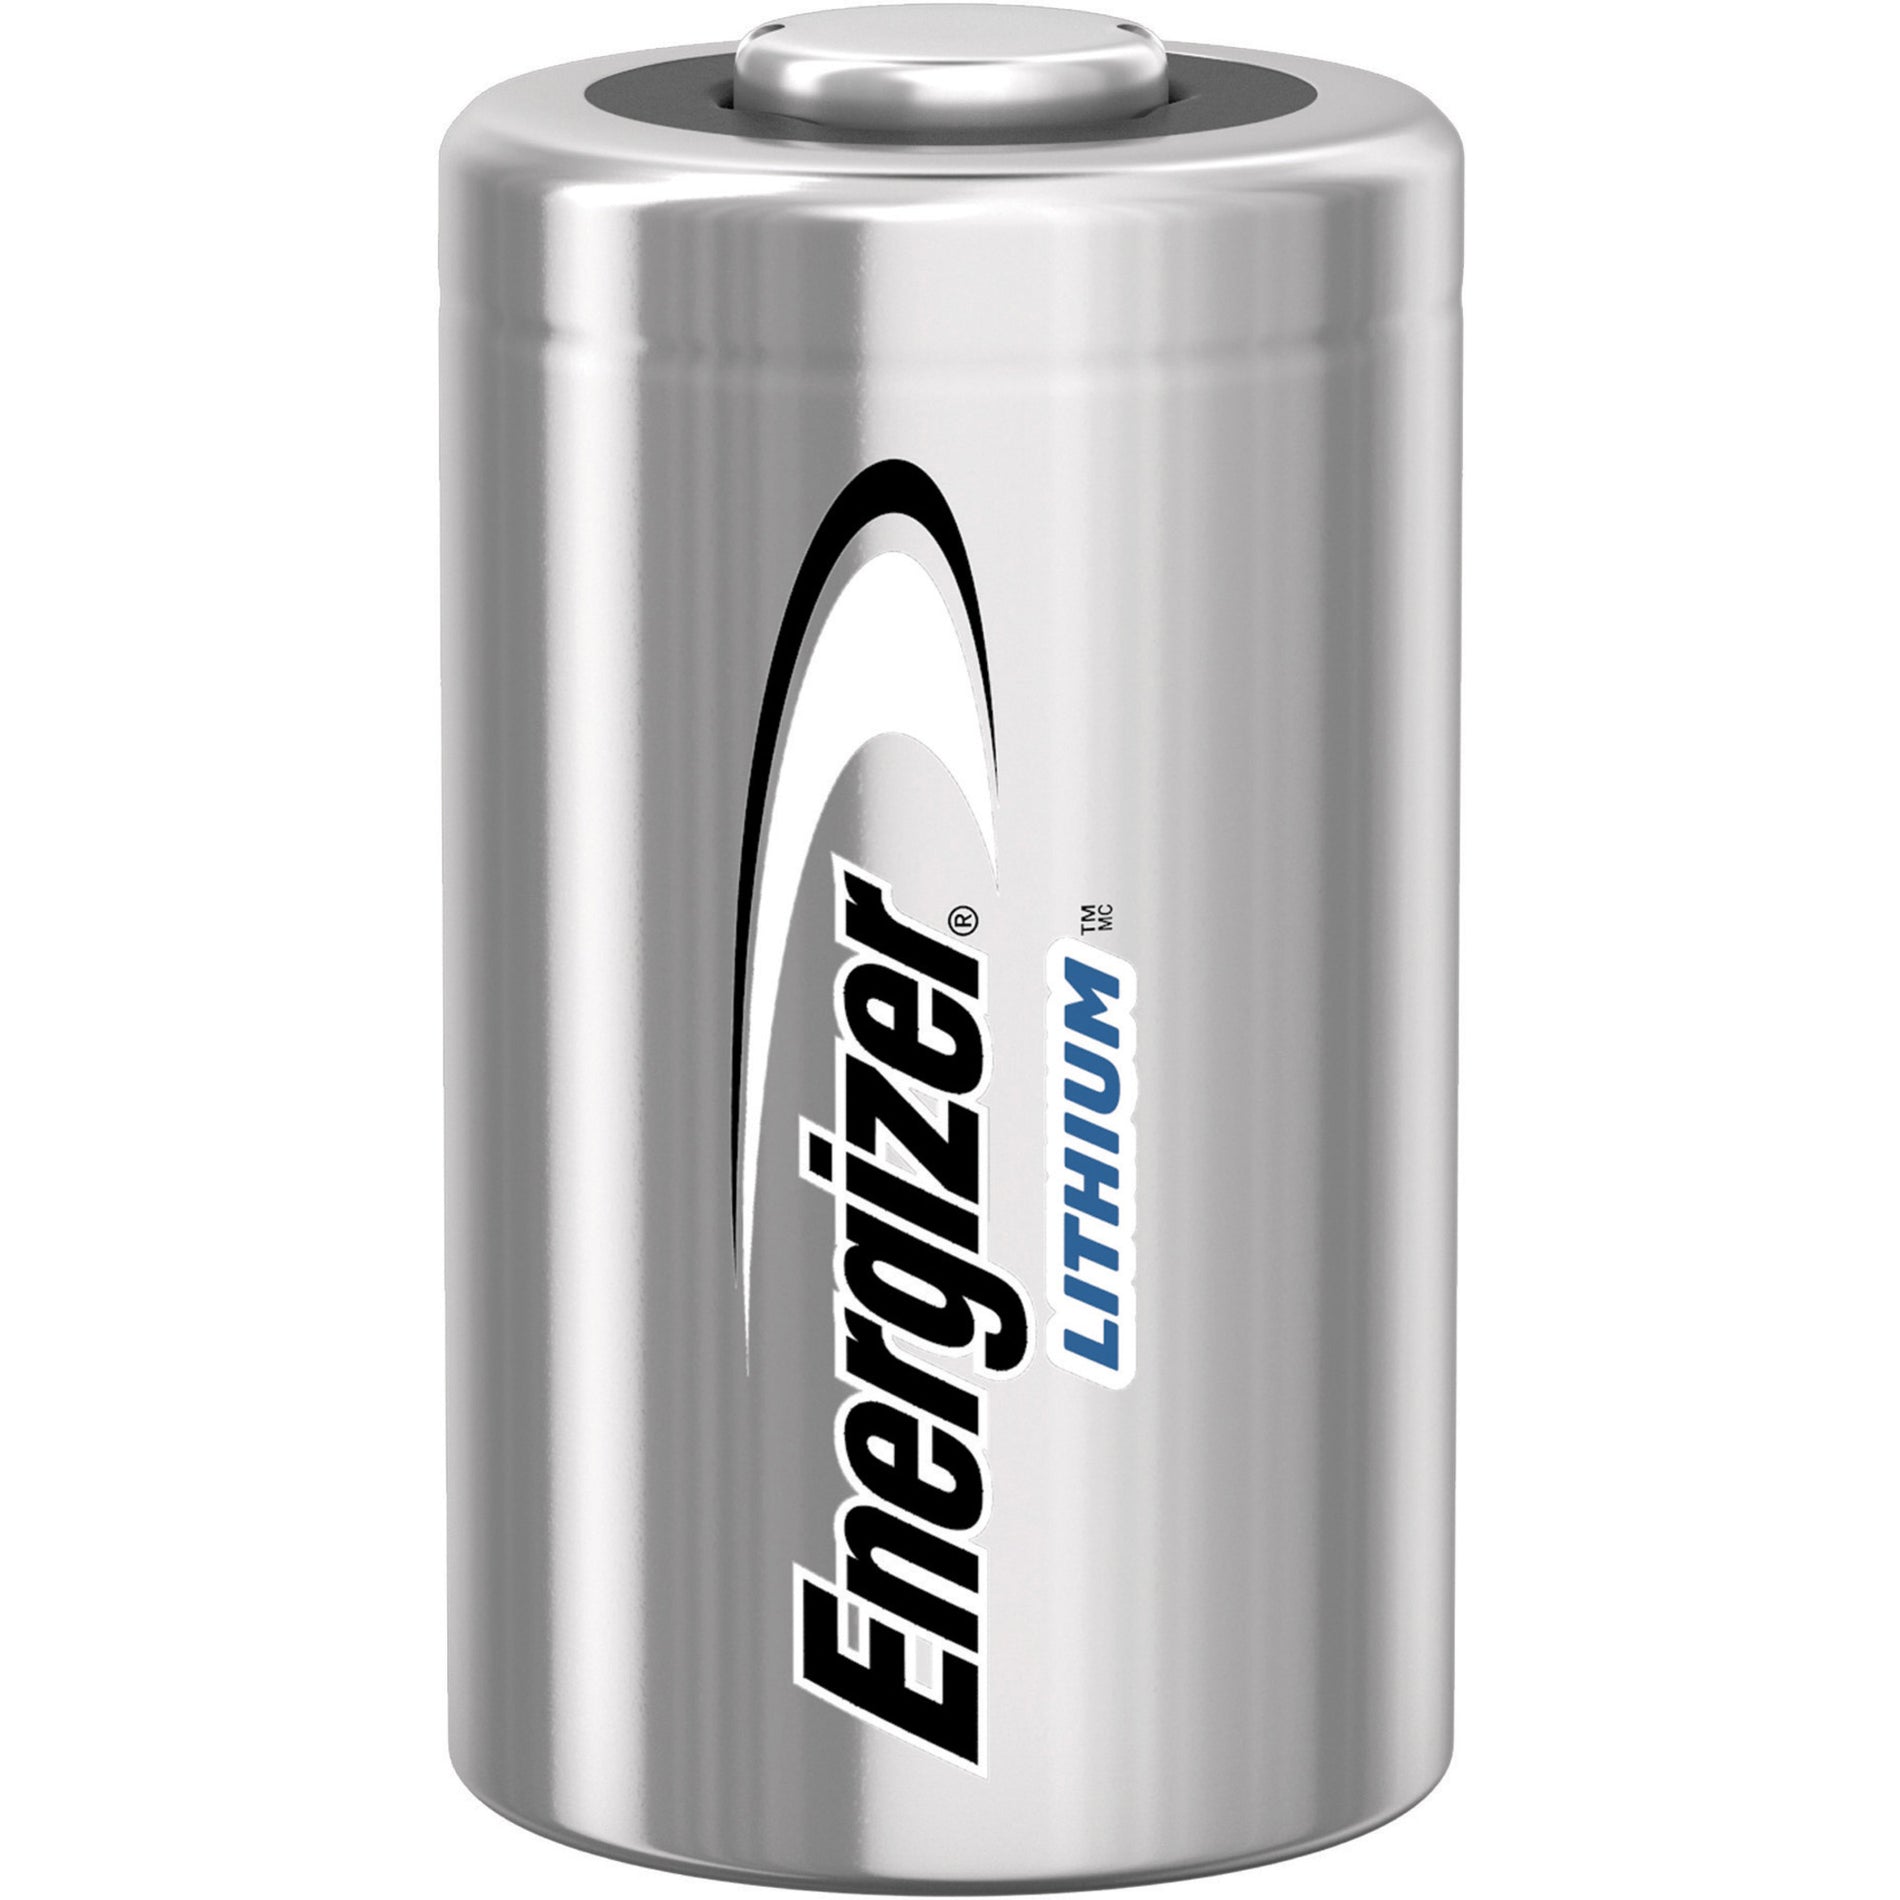 Energizer EL1CR2BP CR2 Lithium Batteries, 3 Volt, Multipurpose